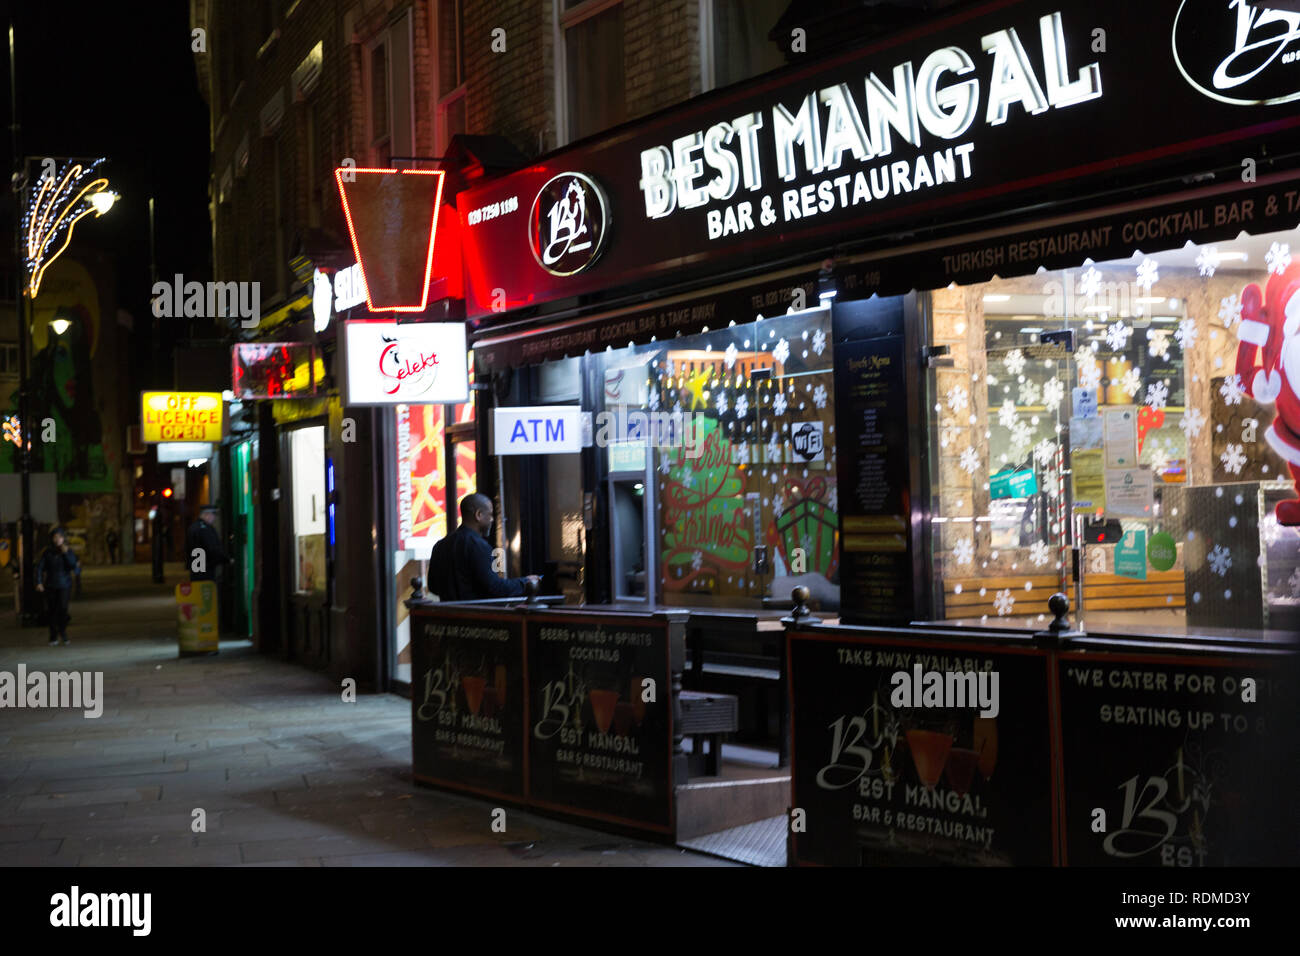 Best Mangal bar and restaurant Stock Photo